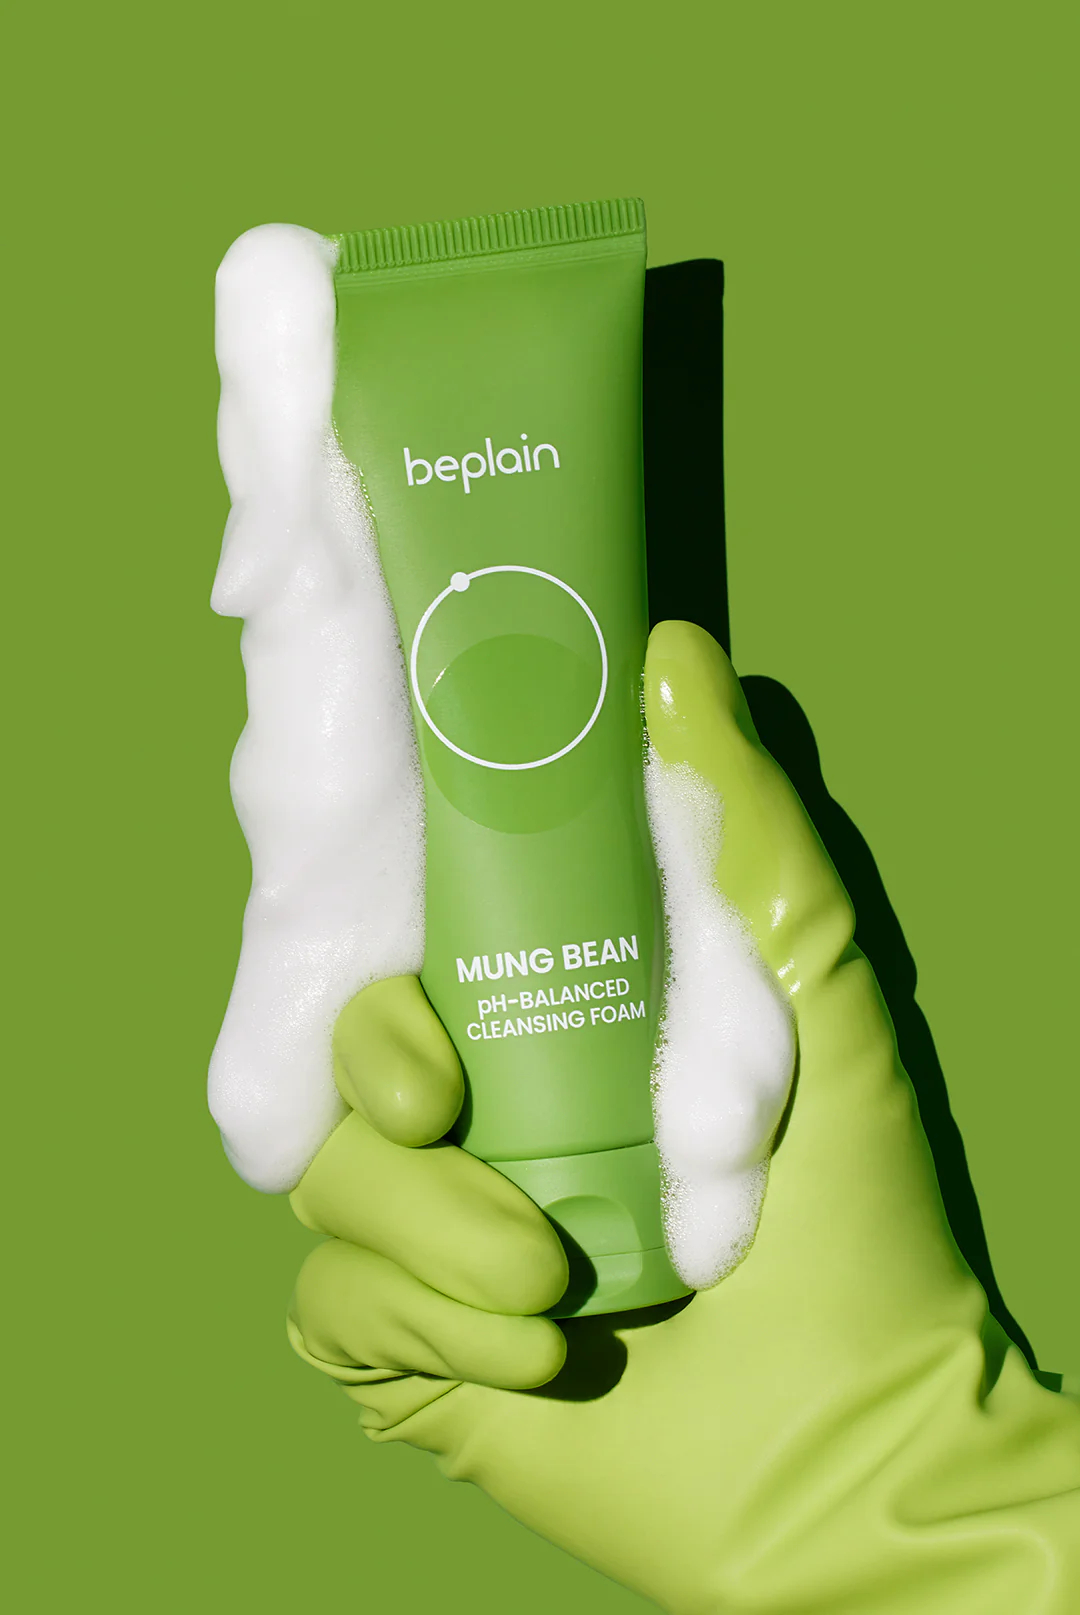 Sữa rửa mặt đậu xanh Beplain Mung Bean pH-Balanced Cleansing Foam giúp làm sạch da hiệu quả